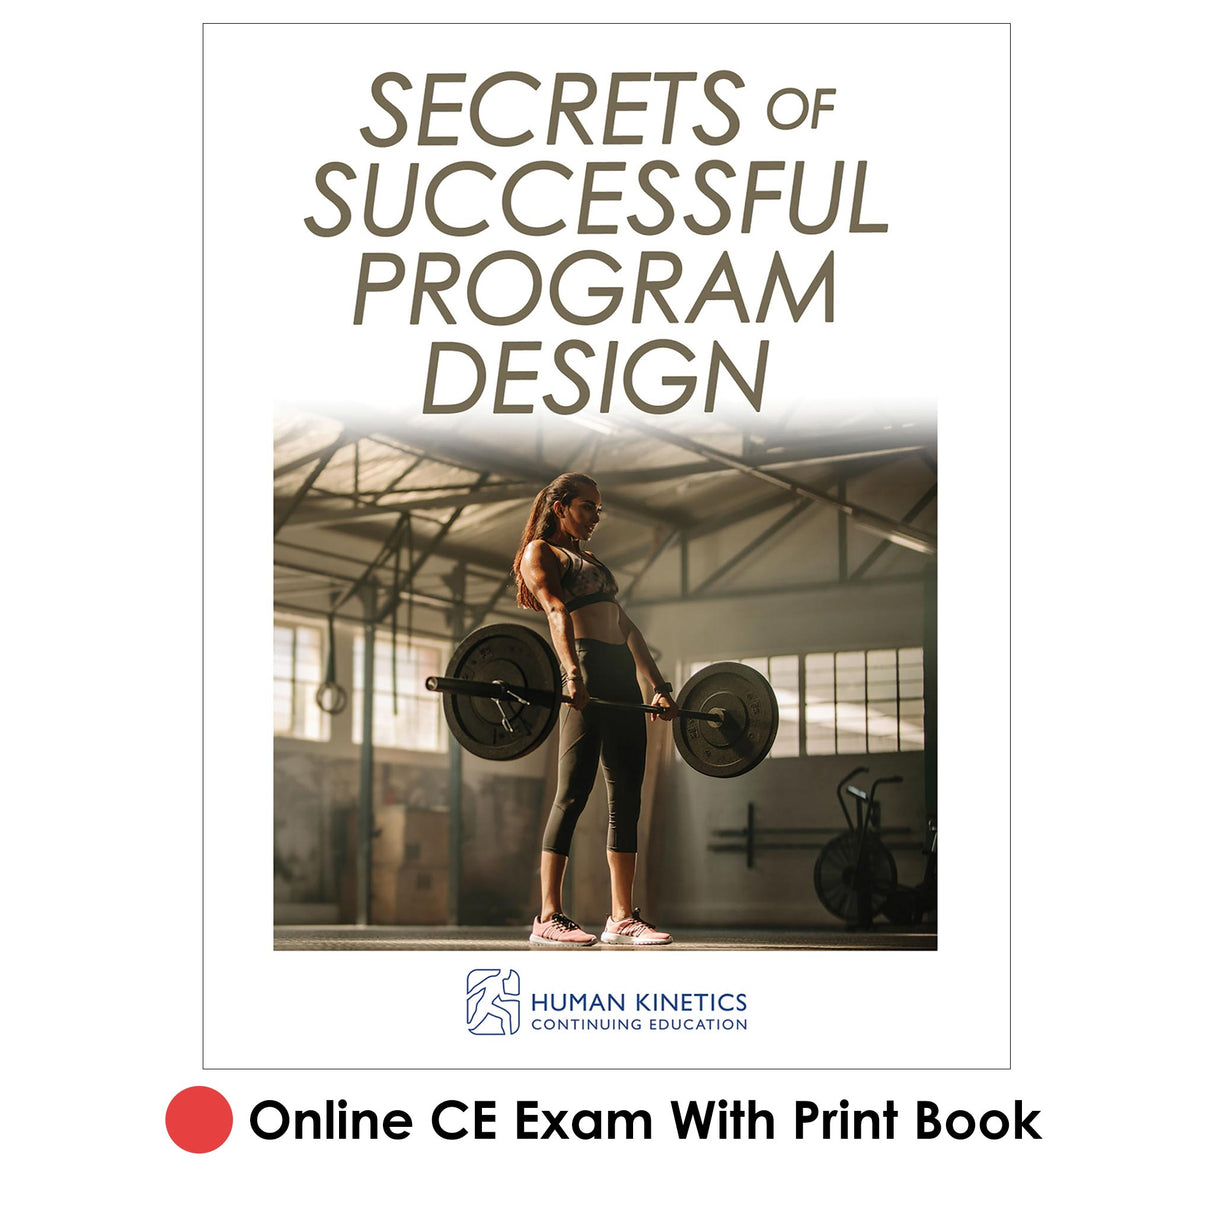 Secrets of Successful Program Design Online CE Exam With Print Book